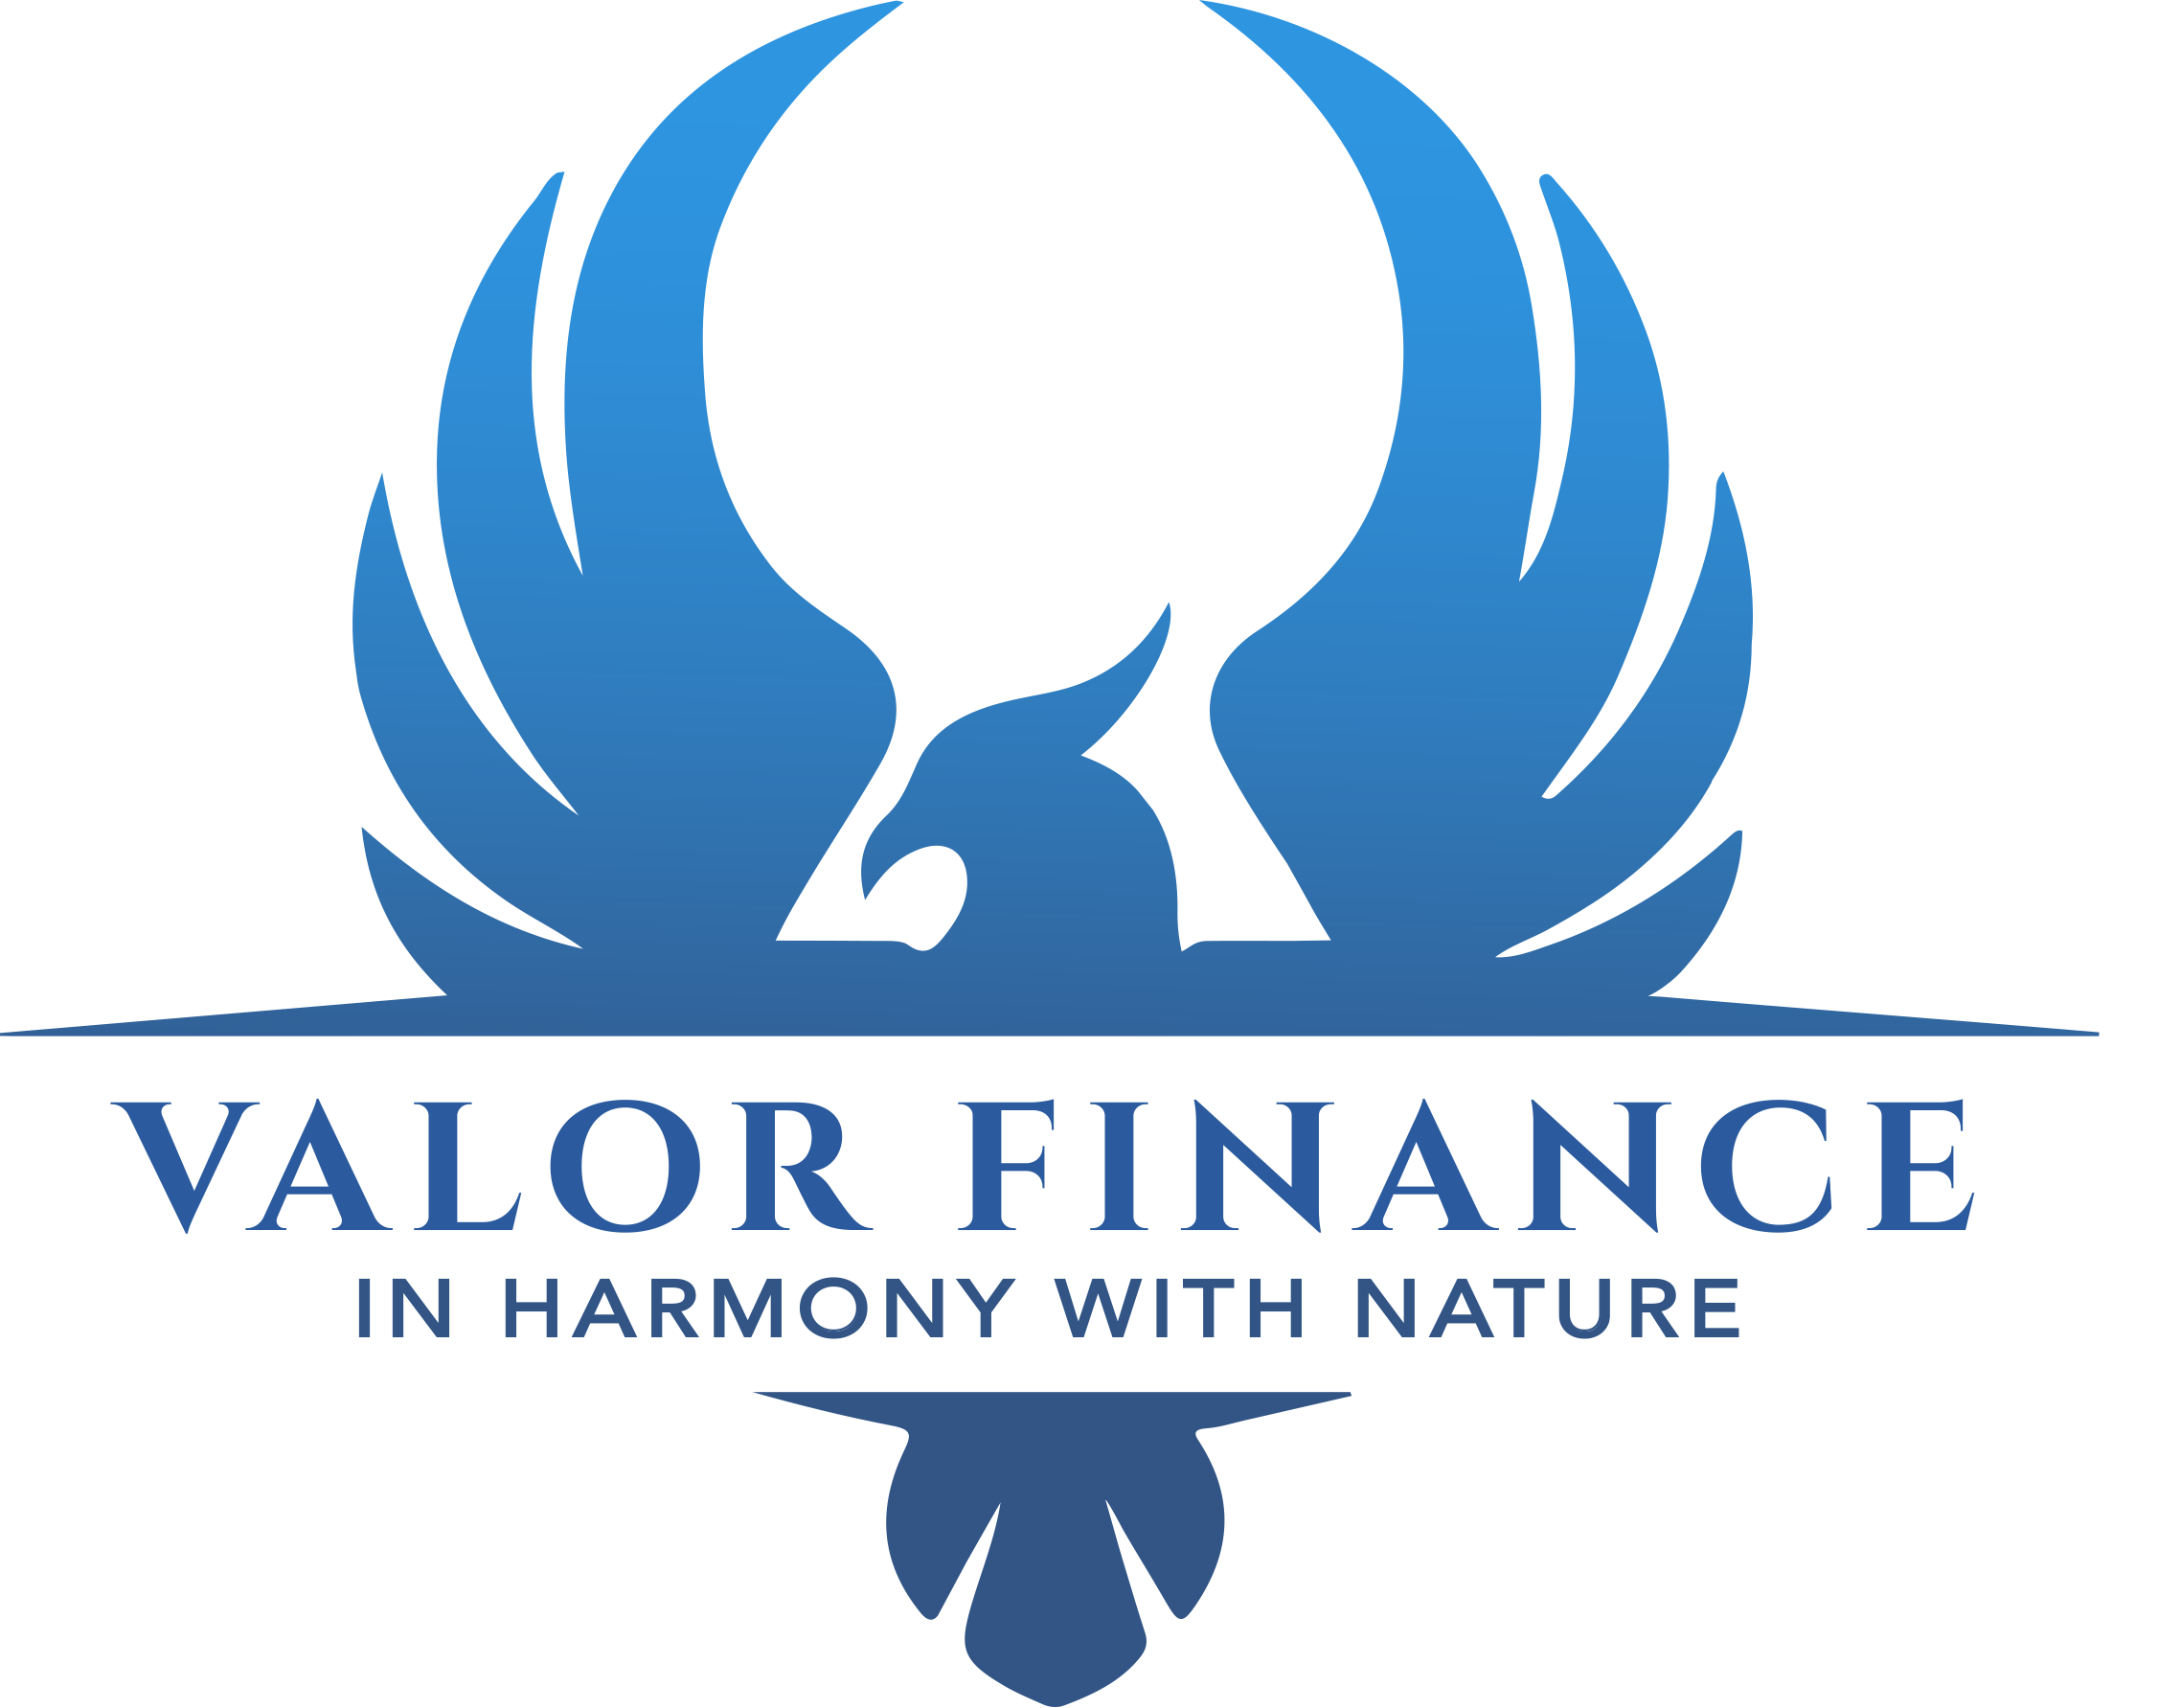 Valor Finance ltd.